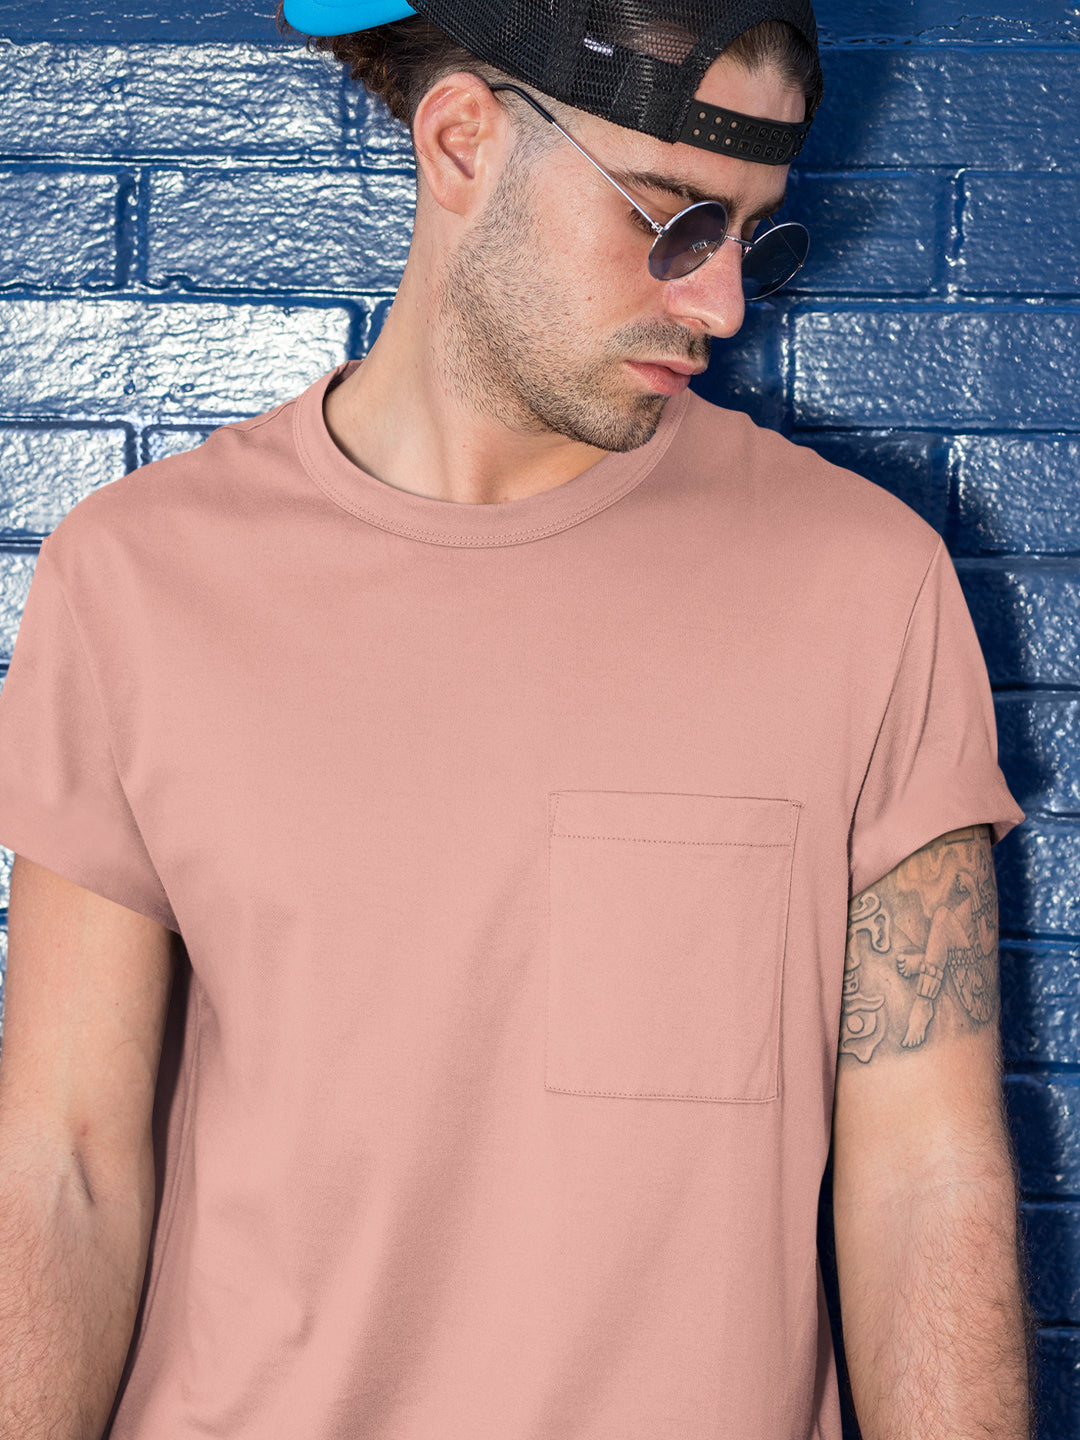 Baliza Men's 100% Cotton Round Neck T-shirt- Salmon Pink